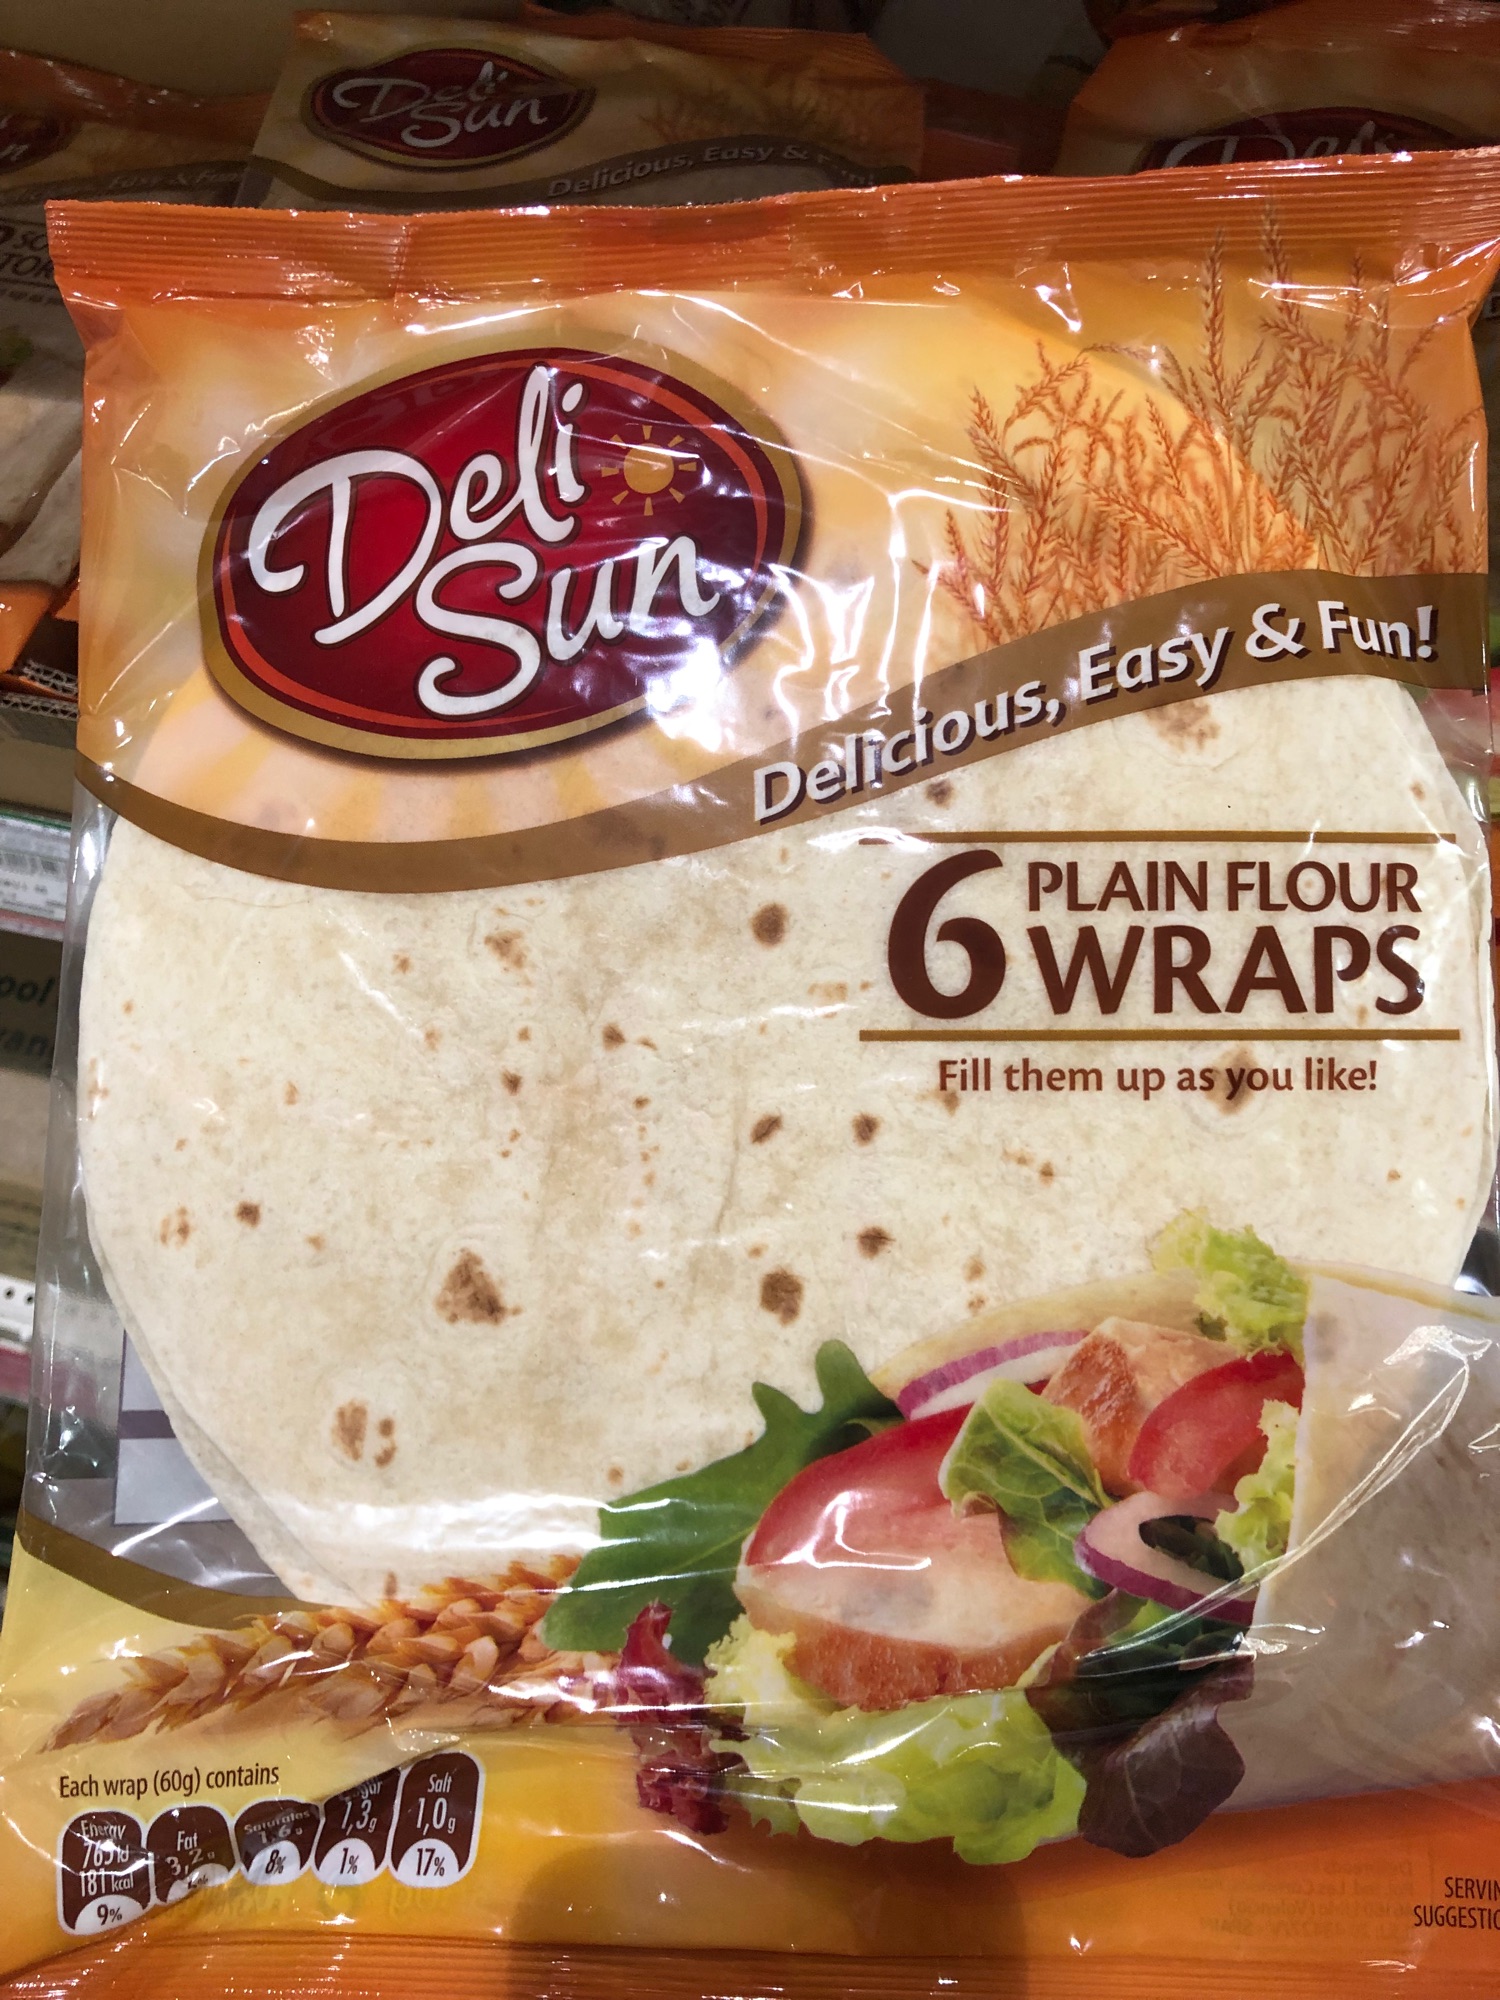 DeliSun Plain Flour แผ่นแป้งตอร์ติญ่าดั้งเดิม 6 Wraps